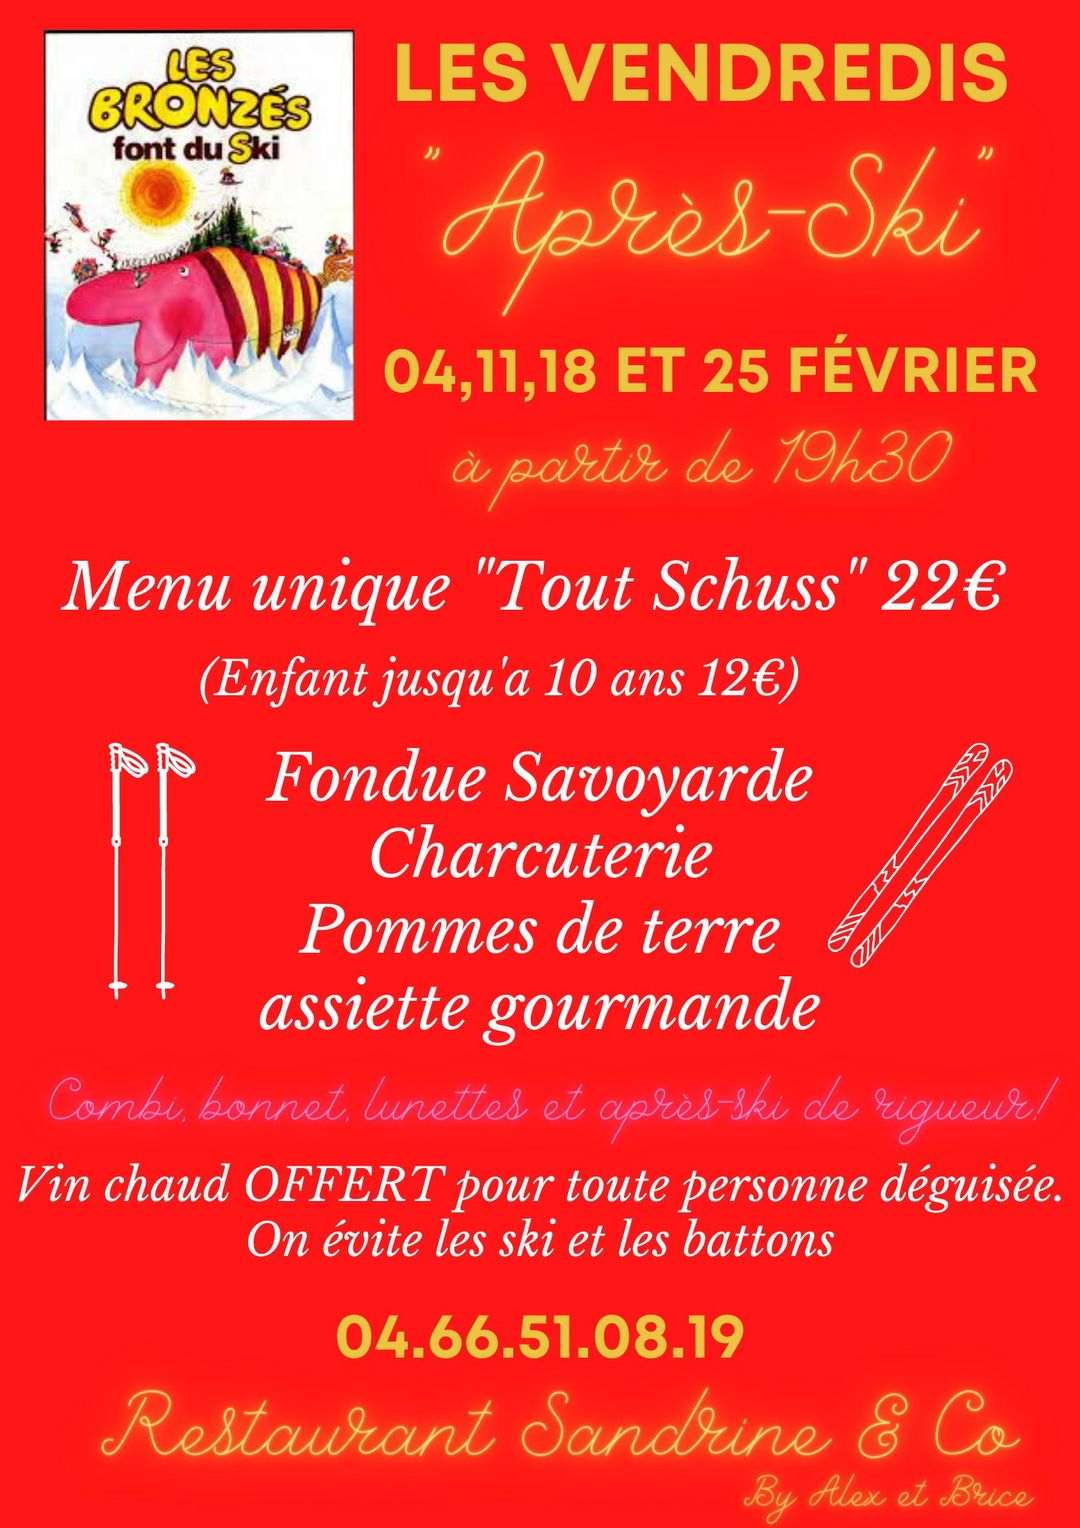 Février vendredis Fondue savoyarde - Vauvert - Sandrine & Co